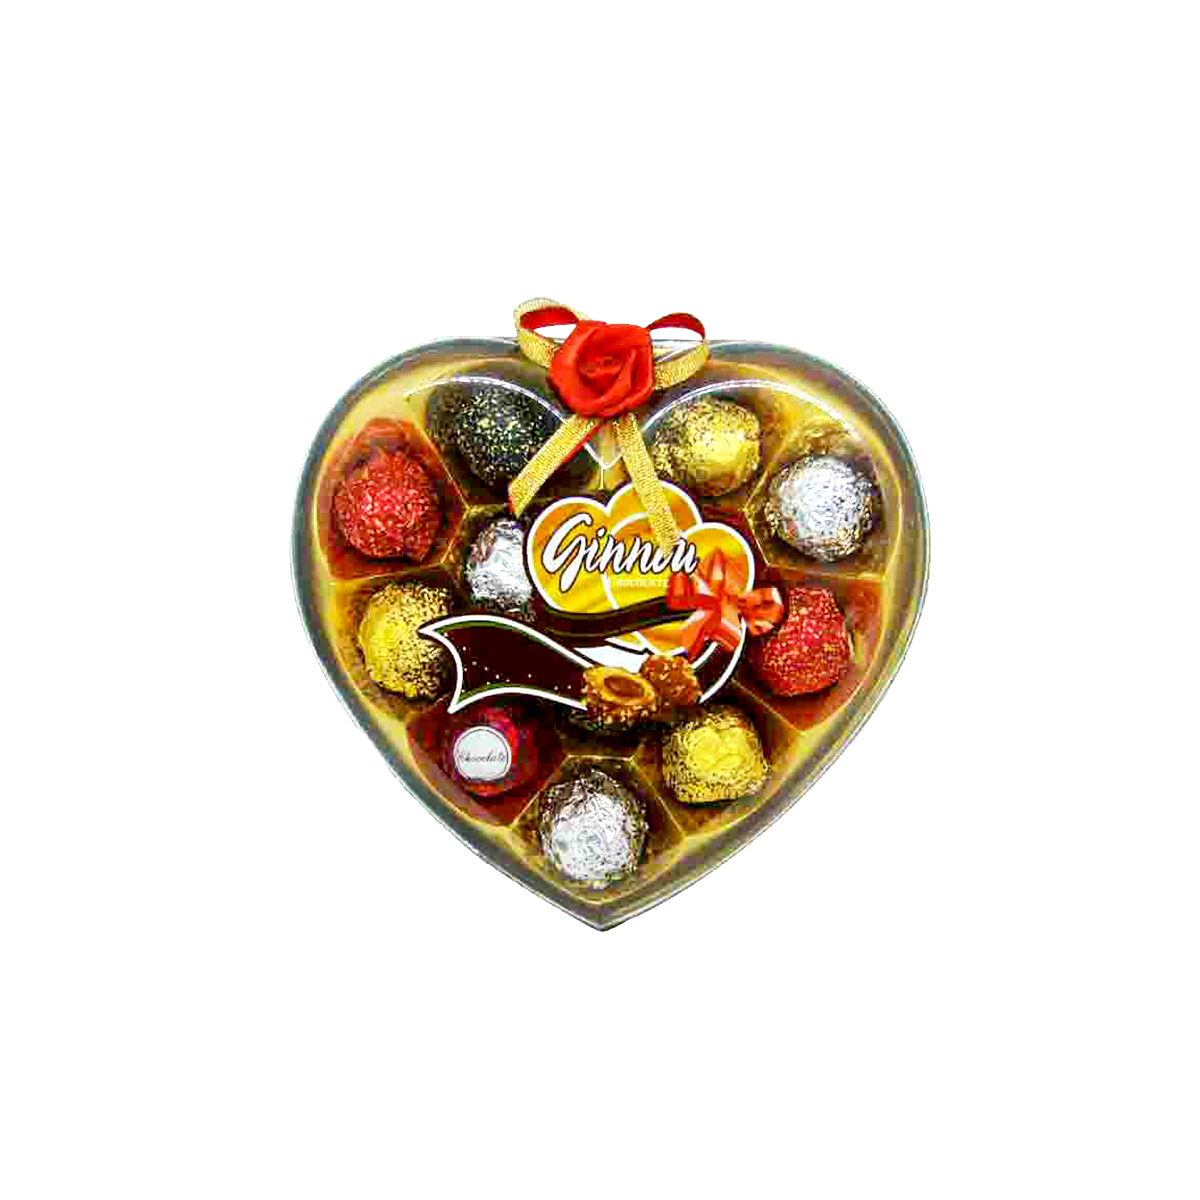 Ginnou Chocolate Heart Box 132gm